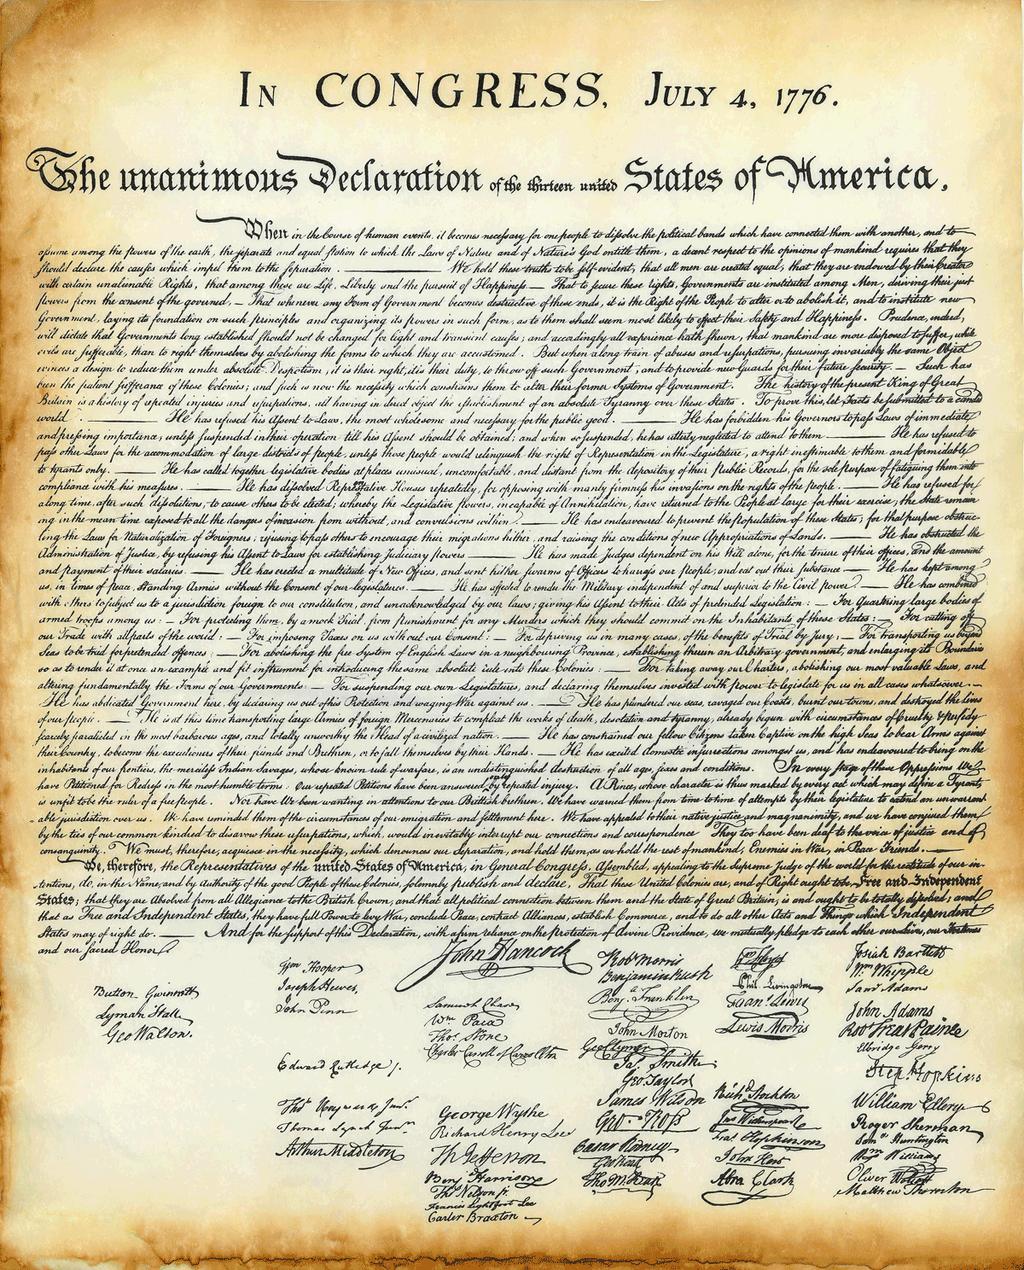 Jefferson Benjamin Franklin wrote the Declaration of